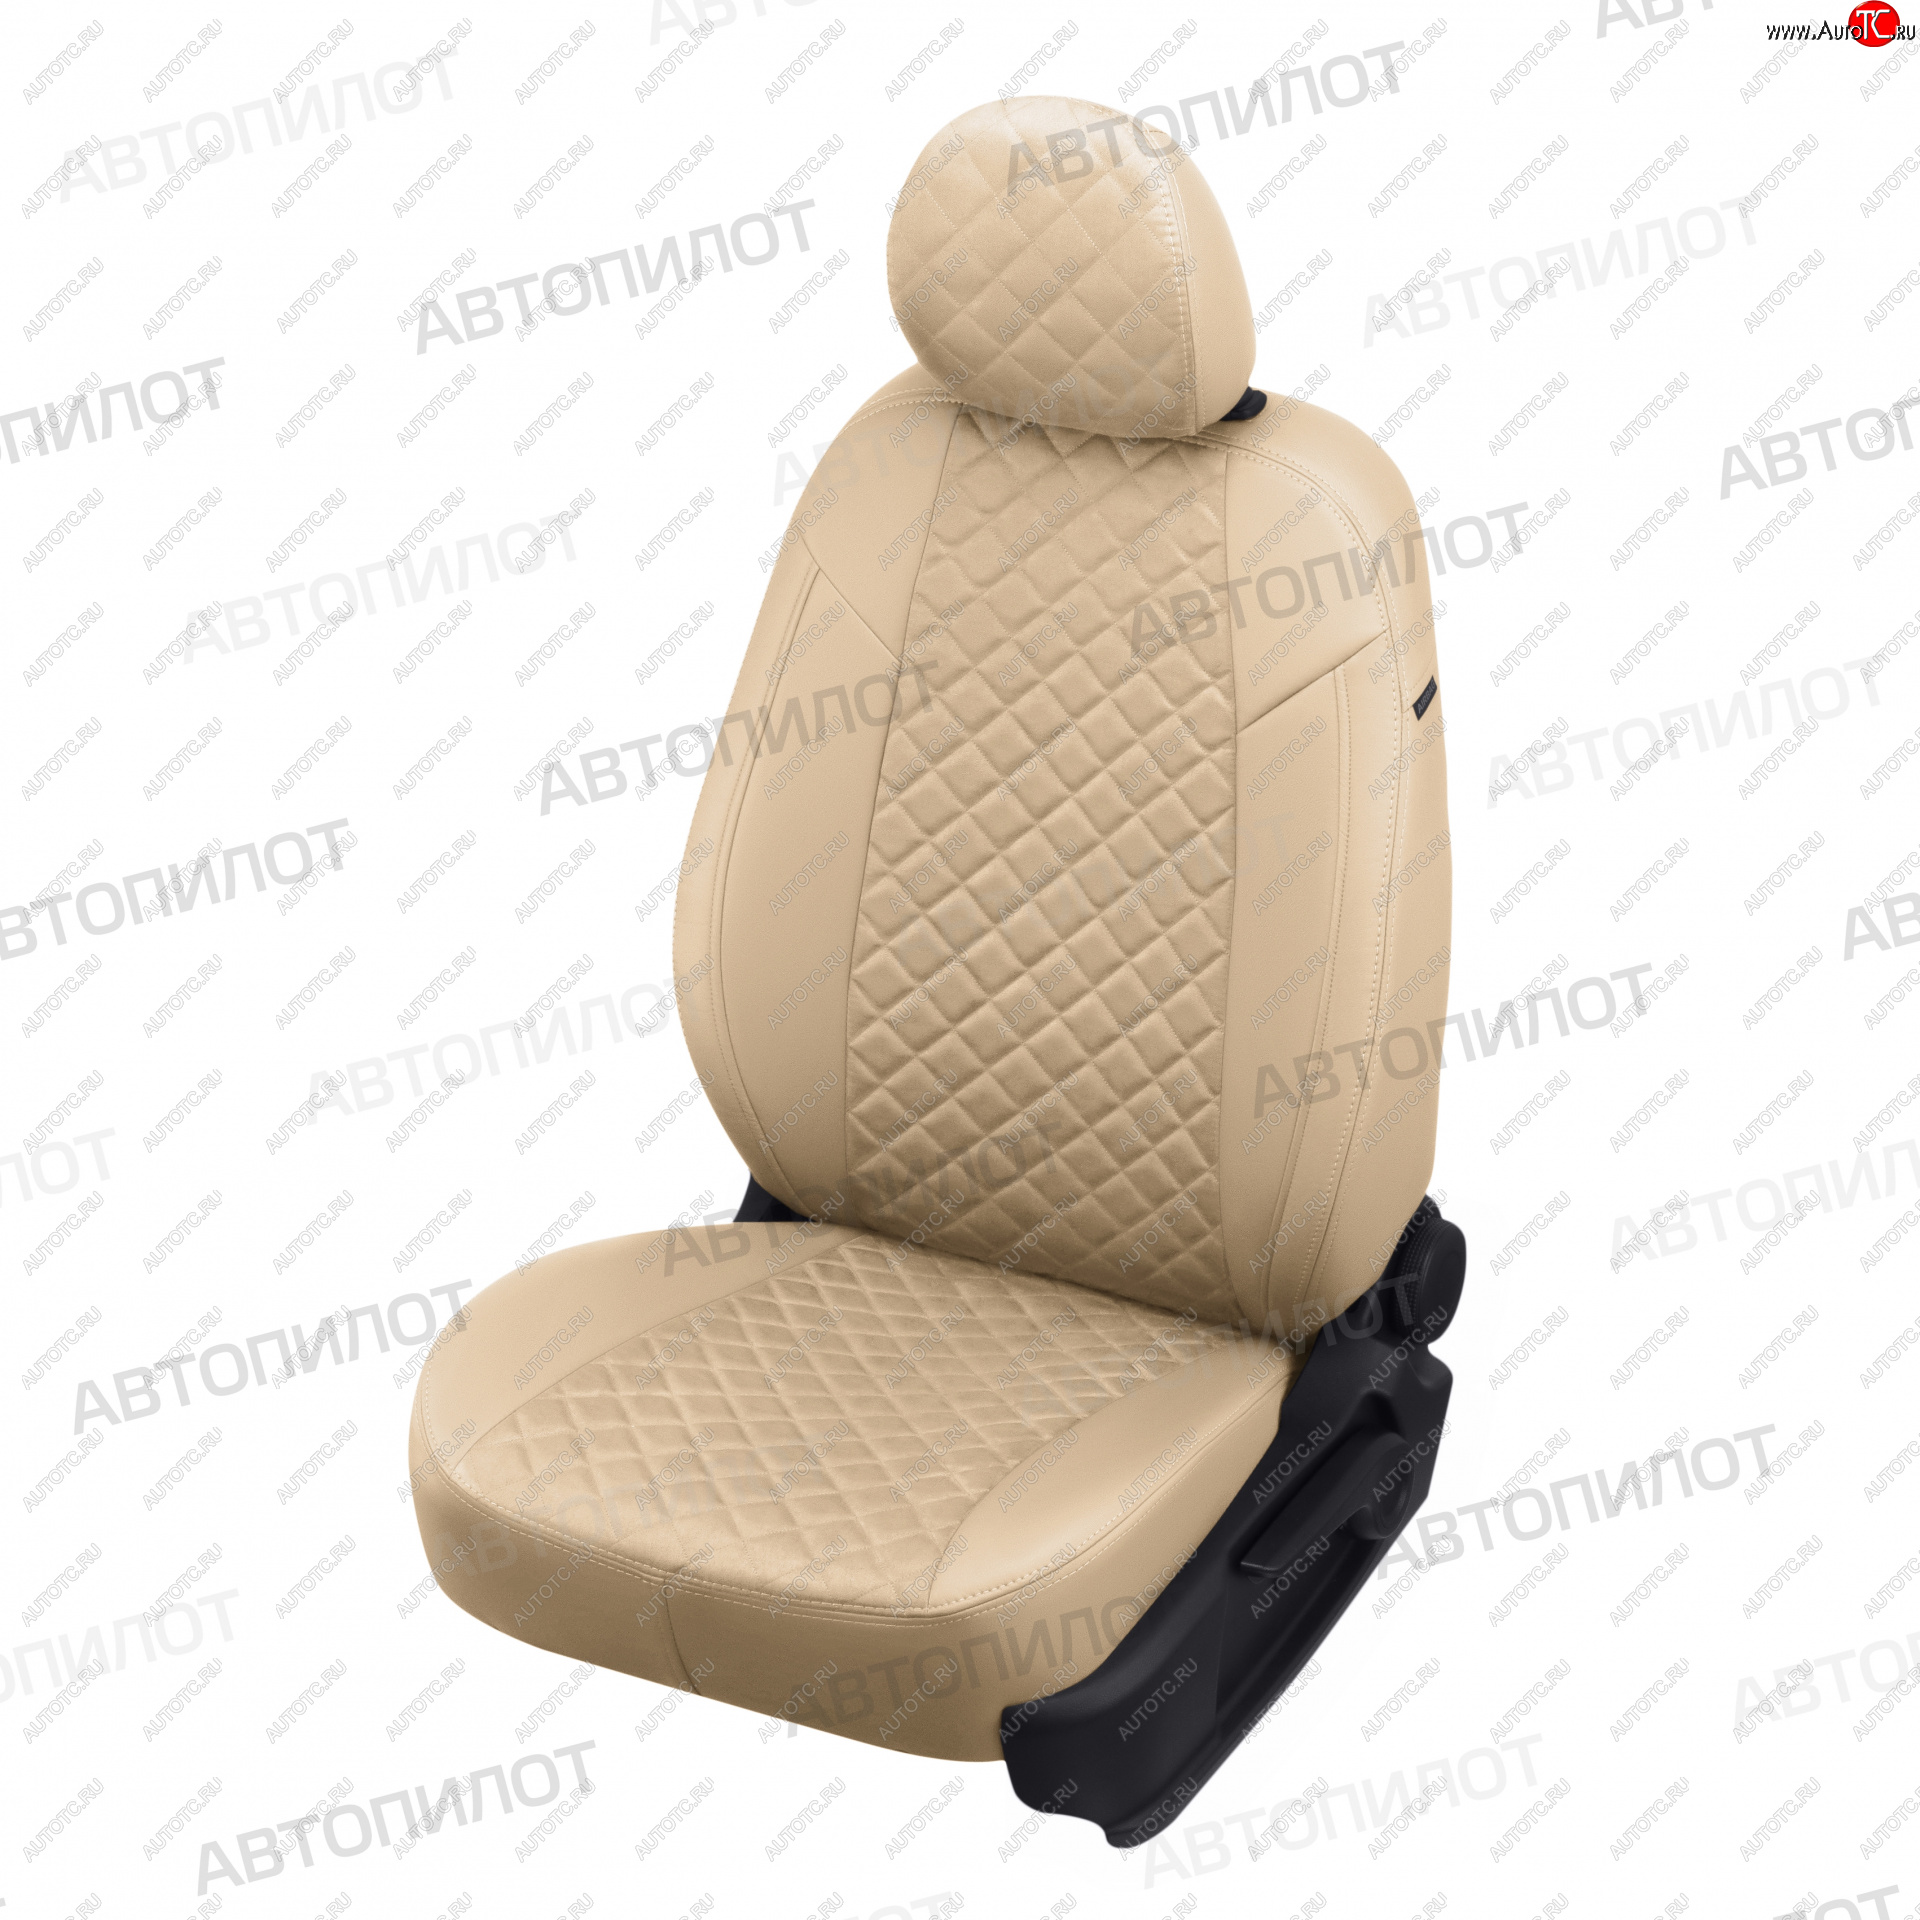 13 999 р. Чехлы сидений (5 мест, экокожа/алькантара) Автопилот Ромб  Ford Galaxy  2 (2006-2015) (бежевый)